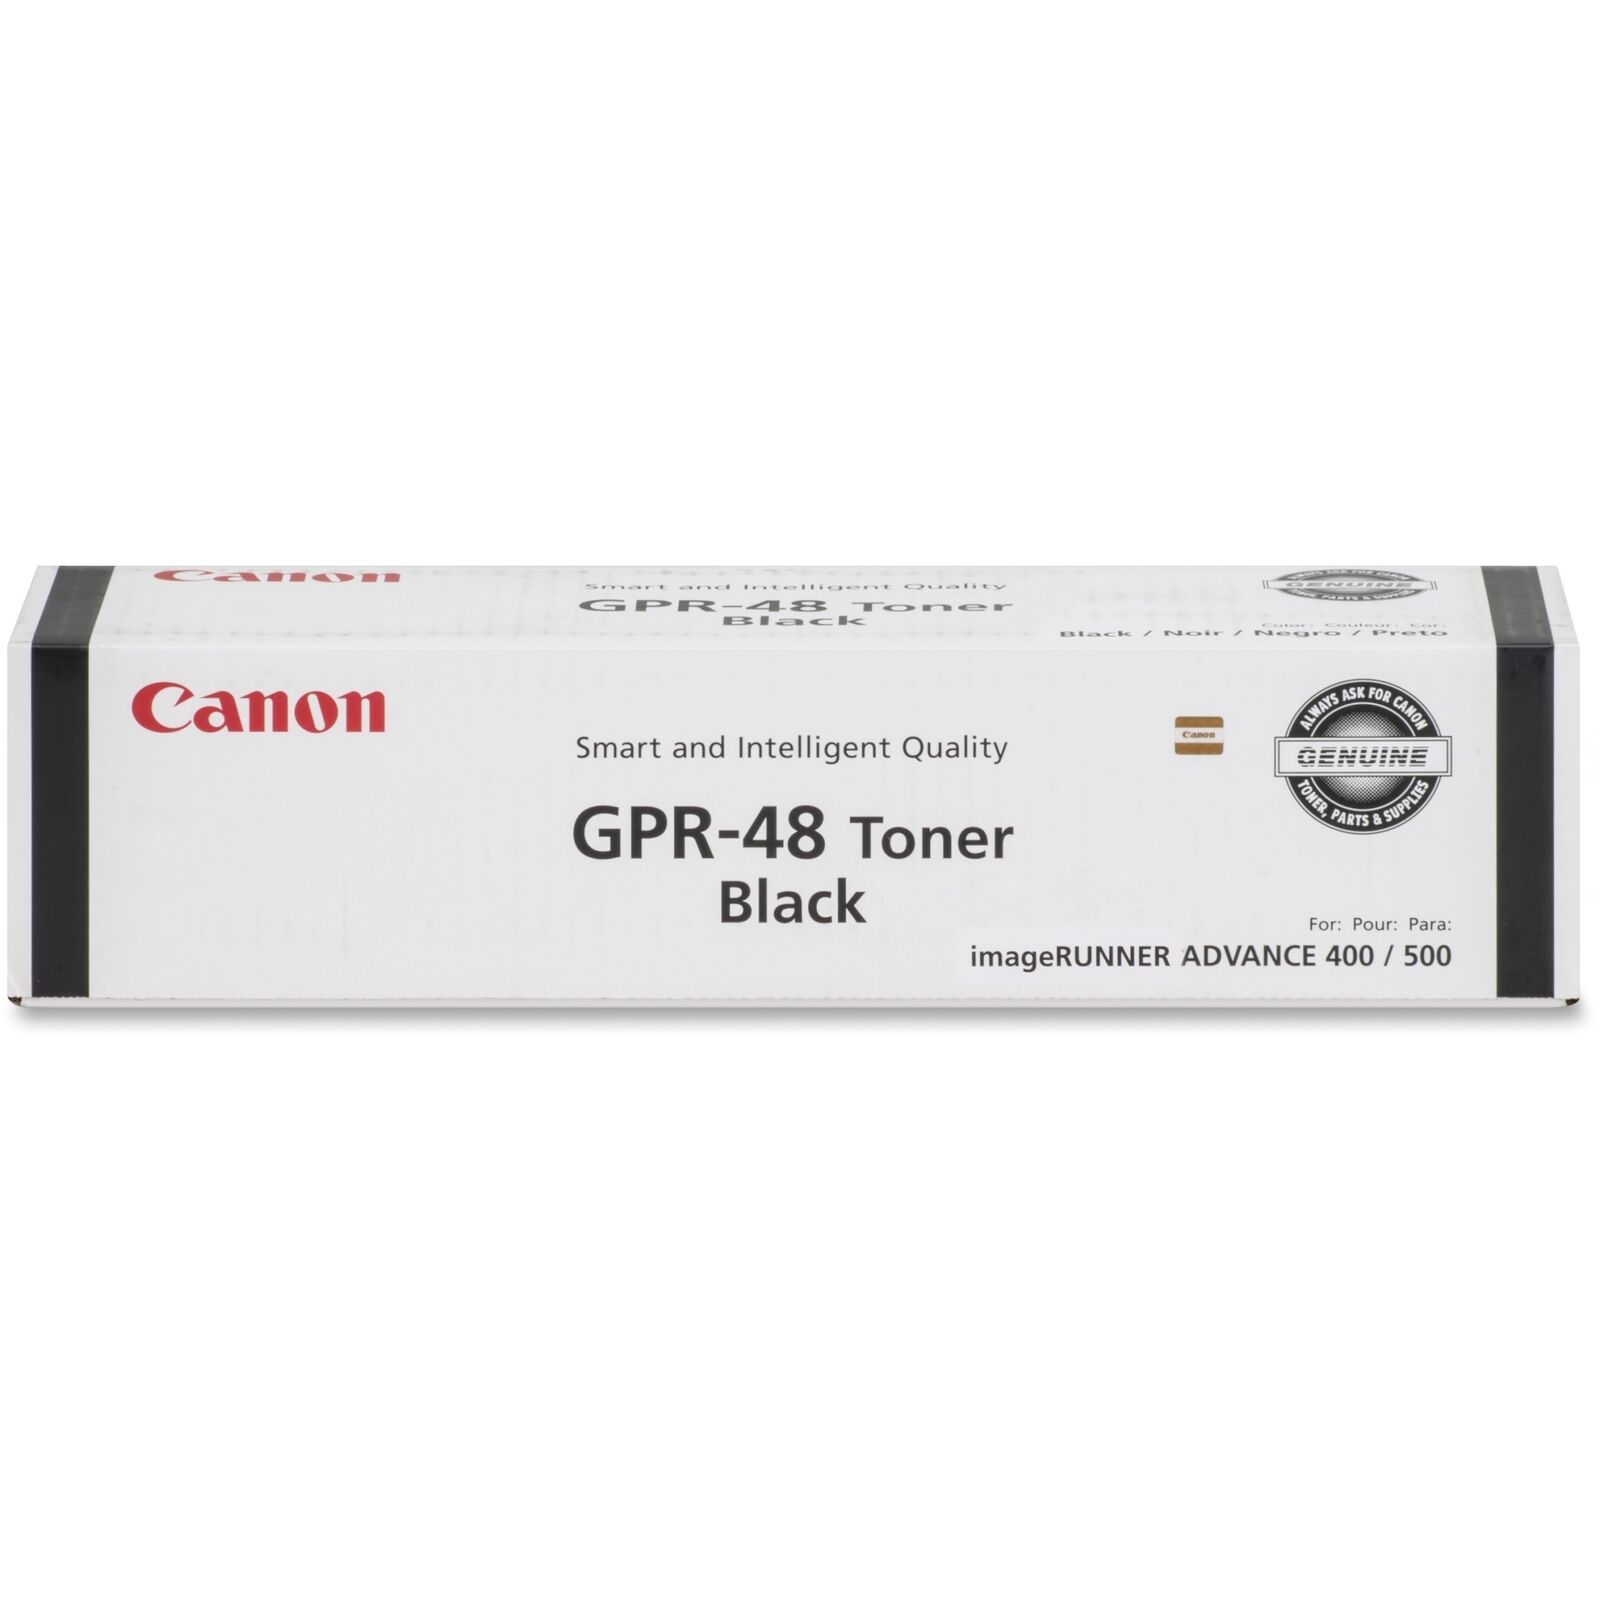 Canon Gpr-48 Toner Cartridge - Black - Laser - 15200 Page - 1 Each (gpr48)